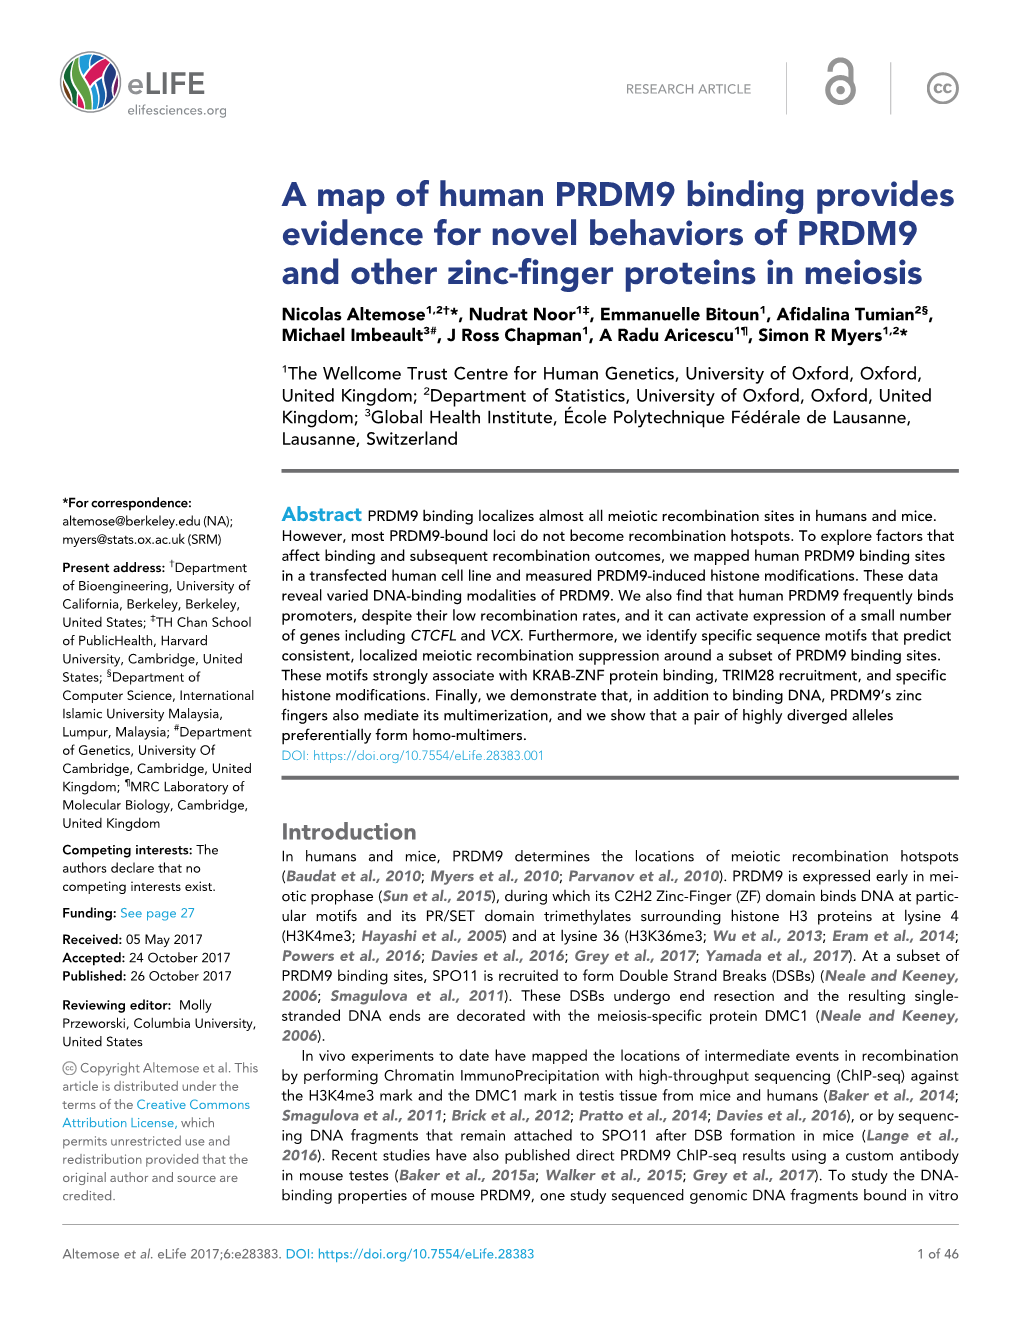 A Map of Human PRDM9 Binding Provides Evidence for Novel